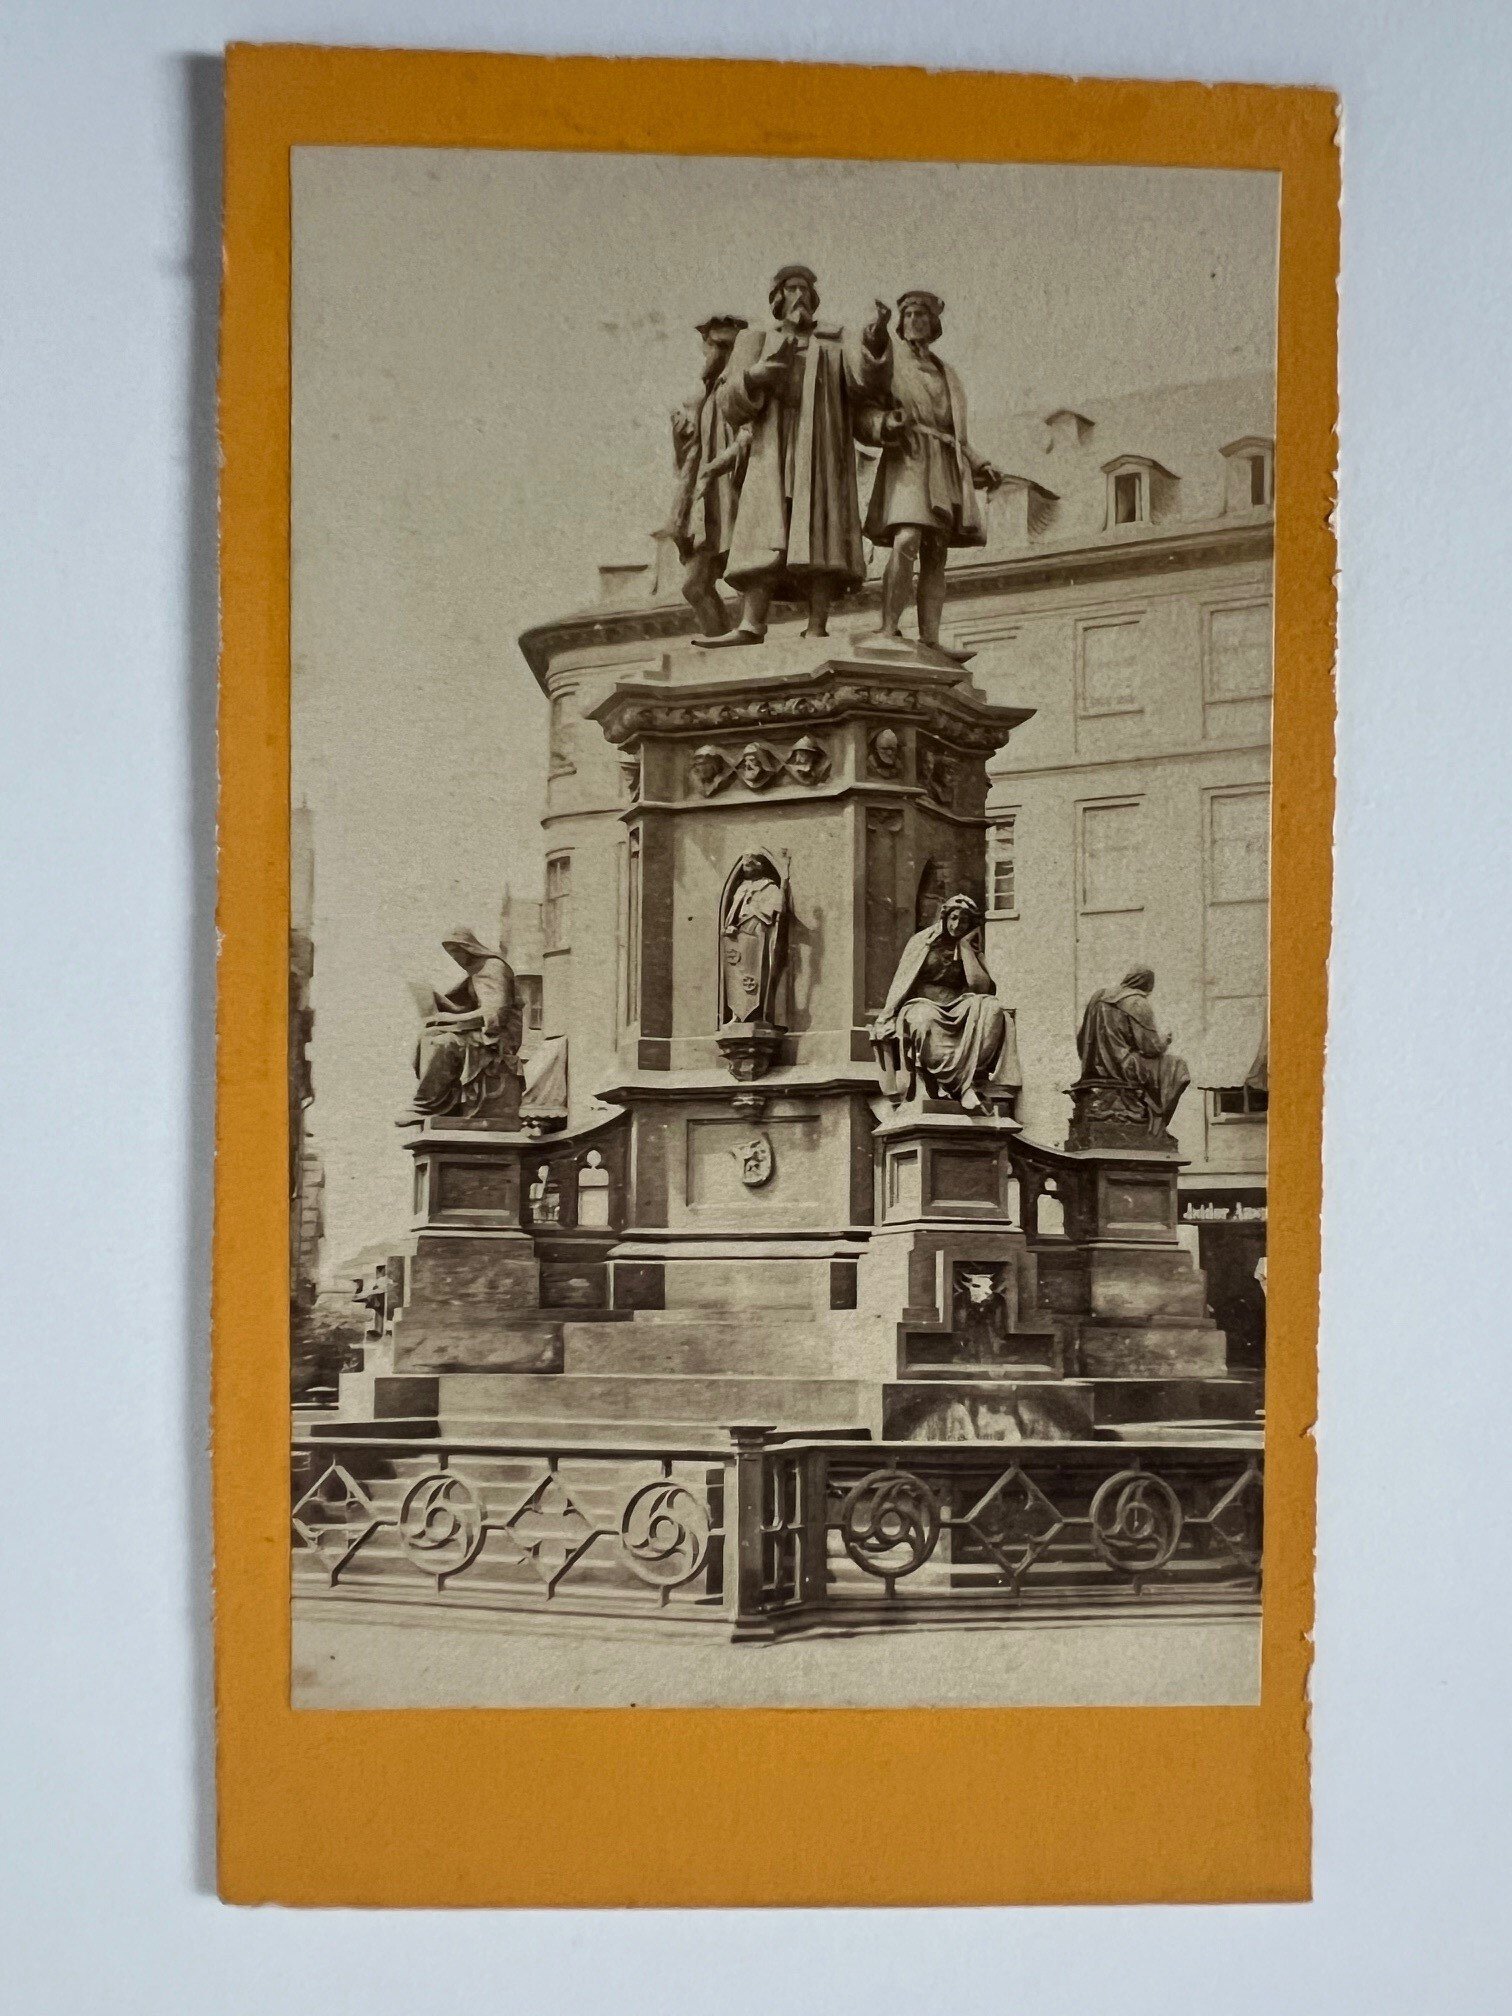 CdV, Theodor Creifelds, Frankfurt, Nr. 268, Guttenberg-Monument, ca. 1872. (Taunus-Rhein-Main - Regionalgeschichtliche Sammlung Dr. Stefan Naas CC BY-NC-SA)